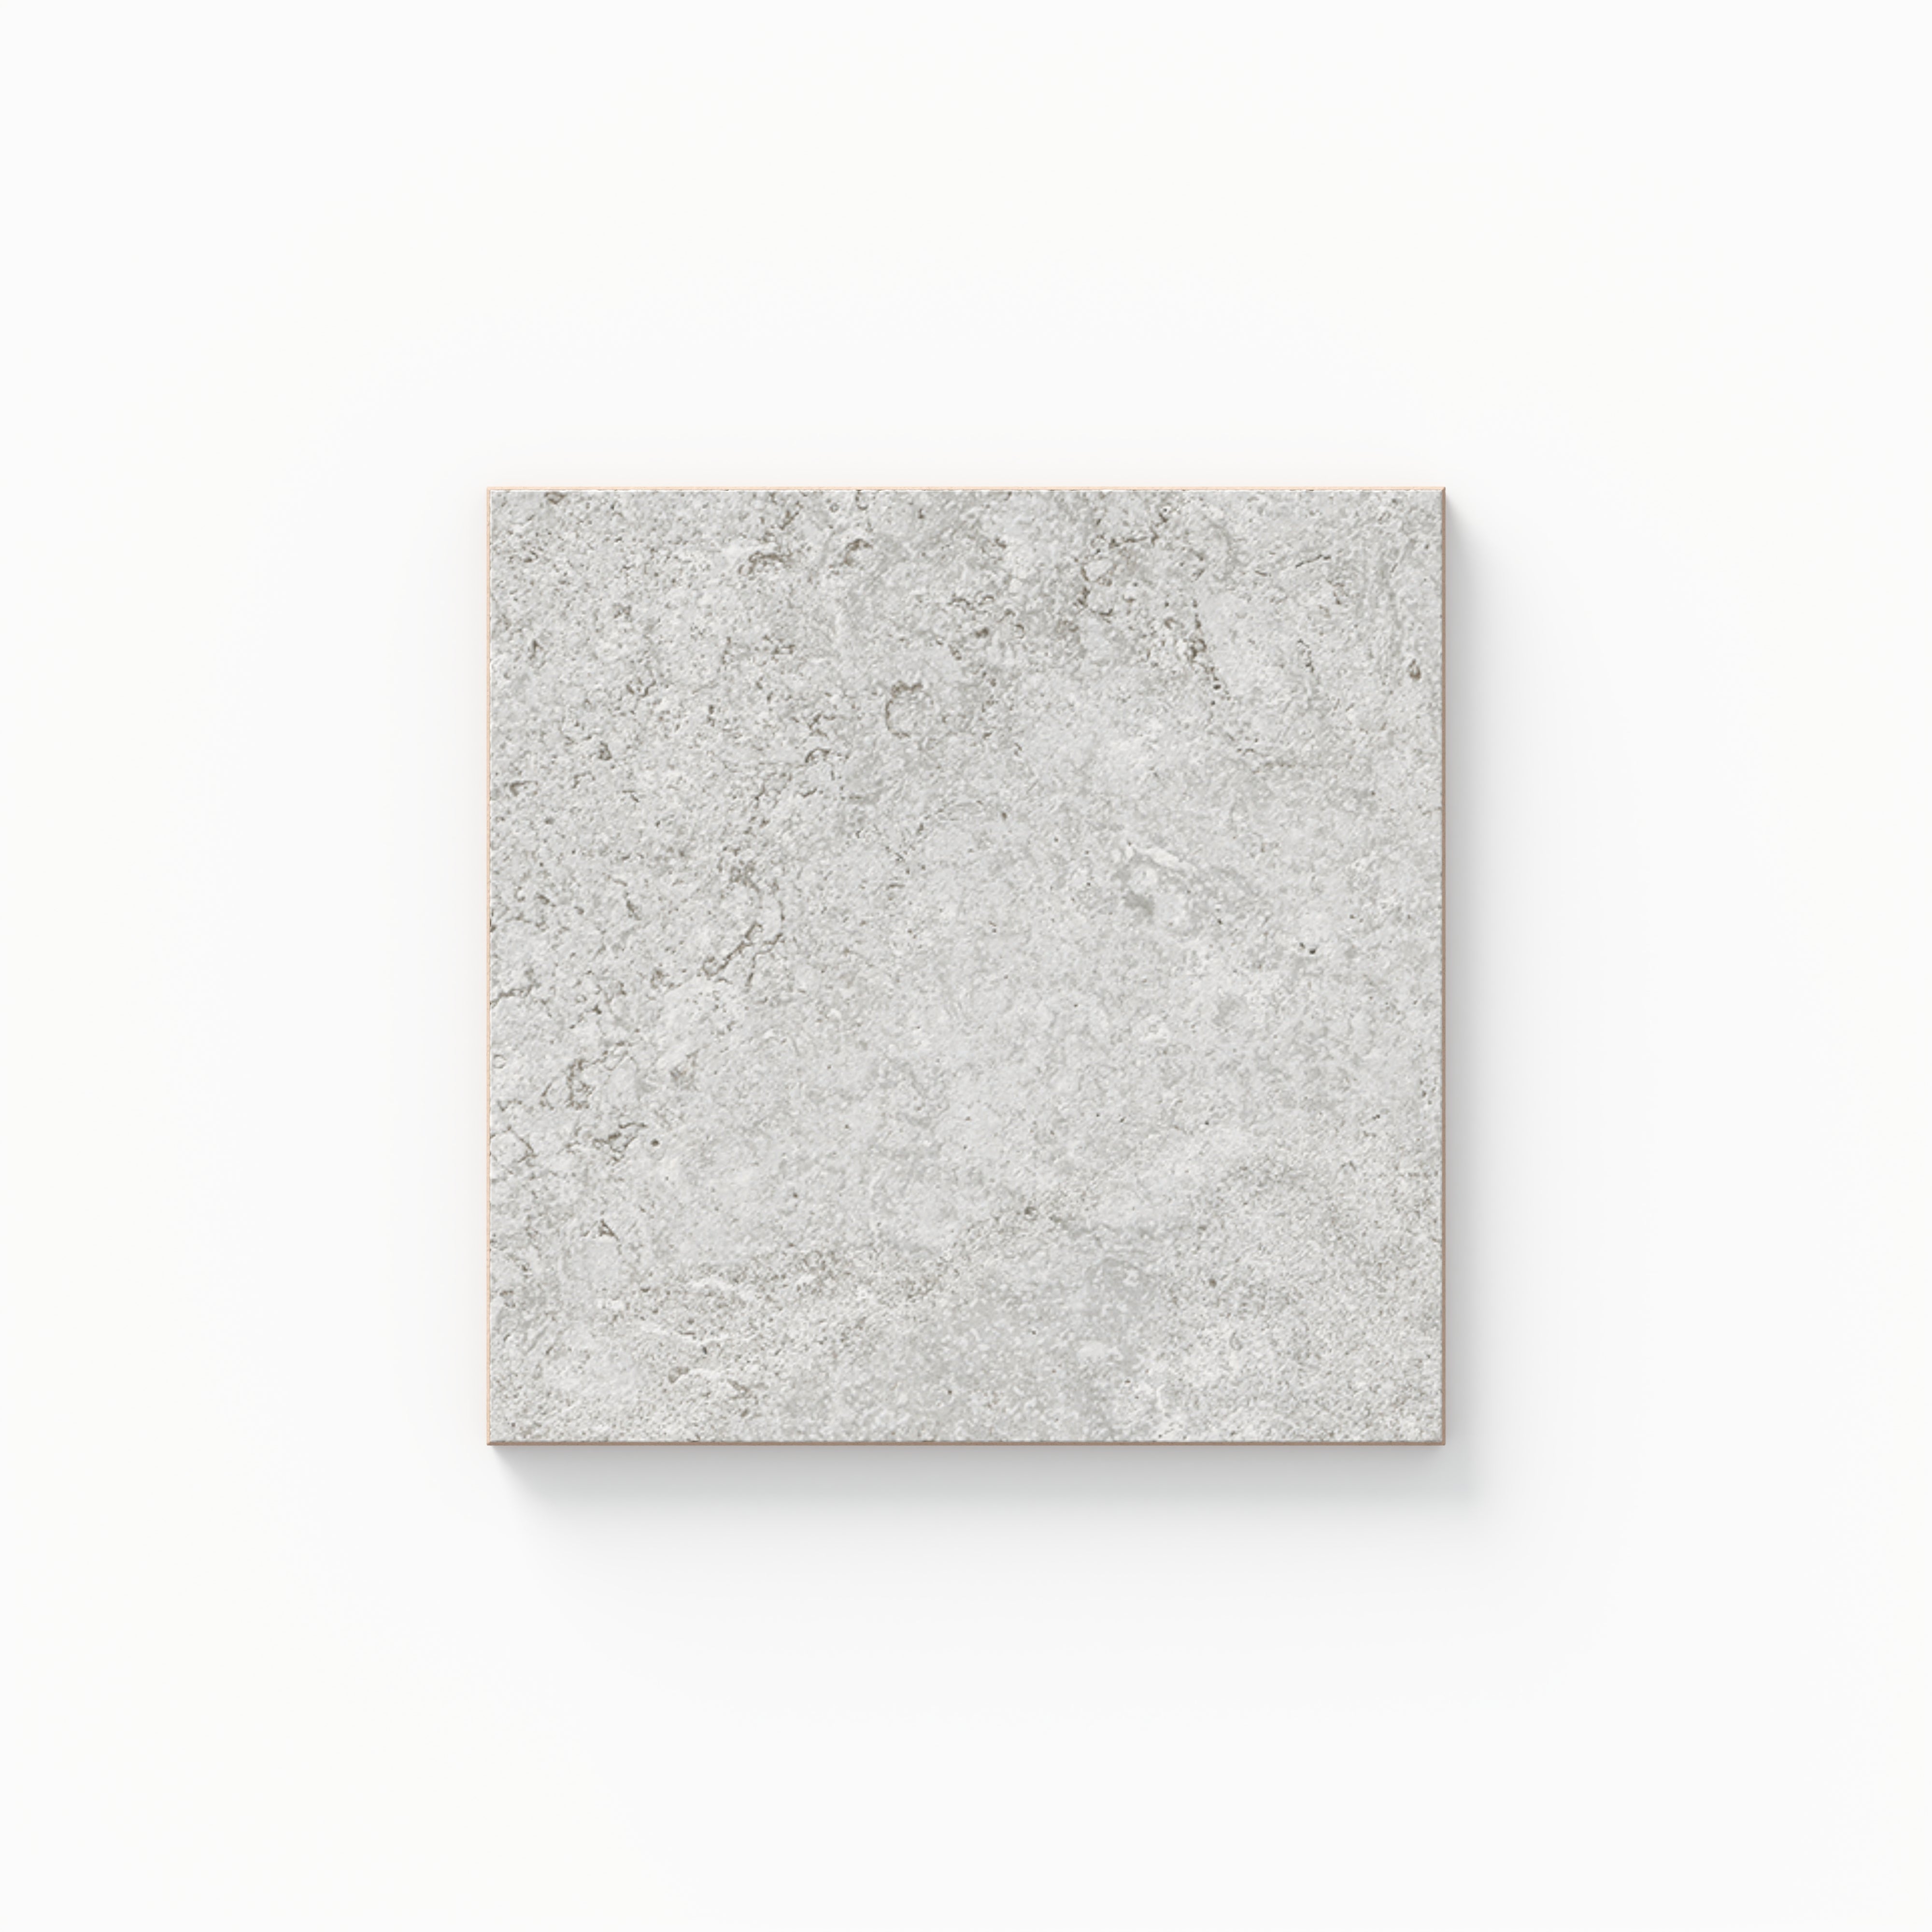 Callahan 20x60 Leathered Ceramic Tile in Fog Sample